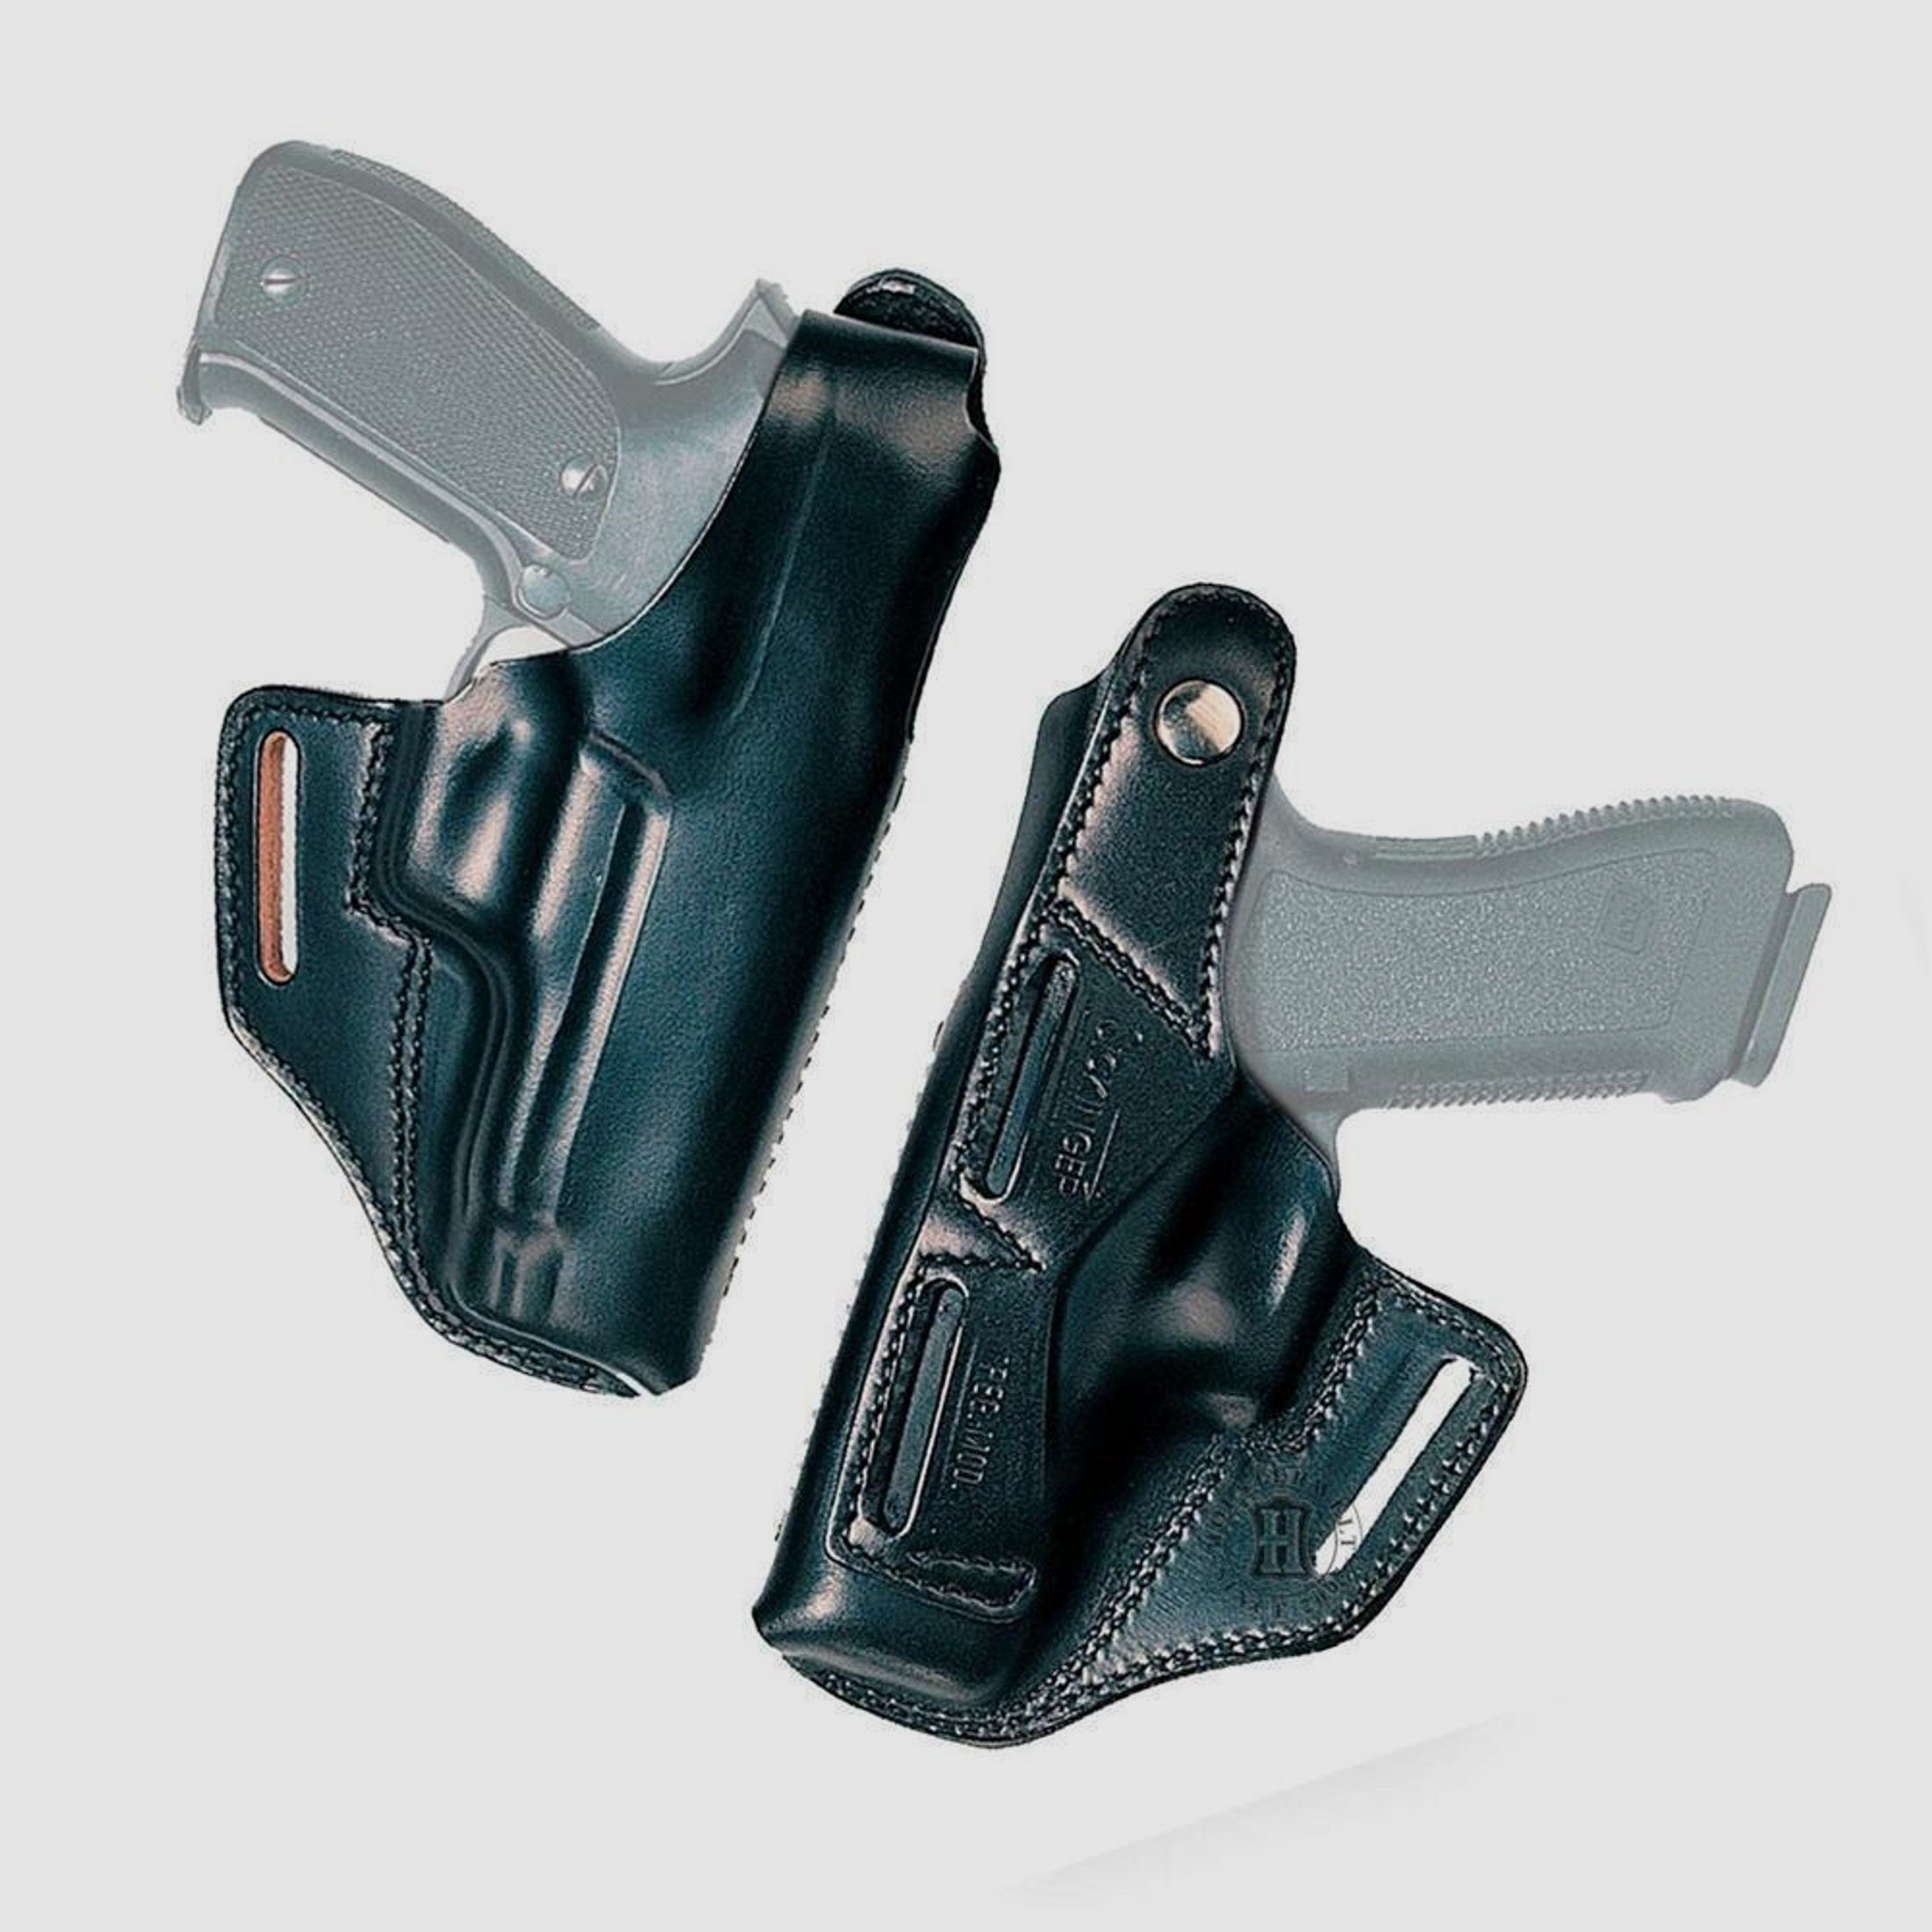 Gürtelholster BELT MASTER Glock 20/21, S&W SIGMA/F, Zoraki 917-Linkshänder-Braun